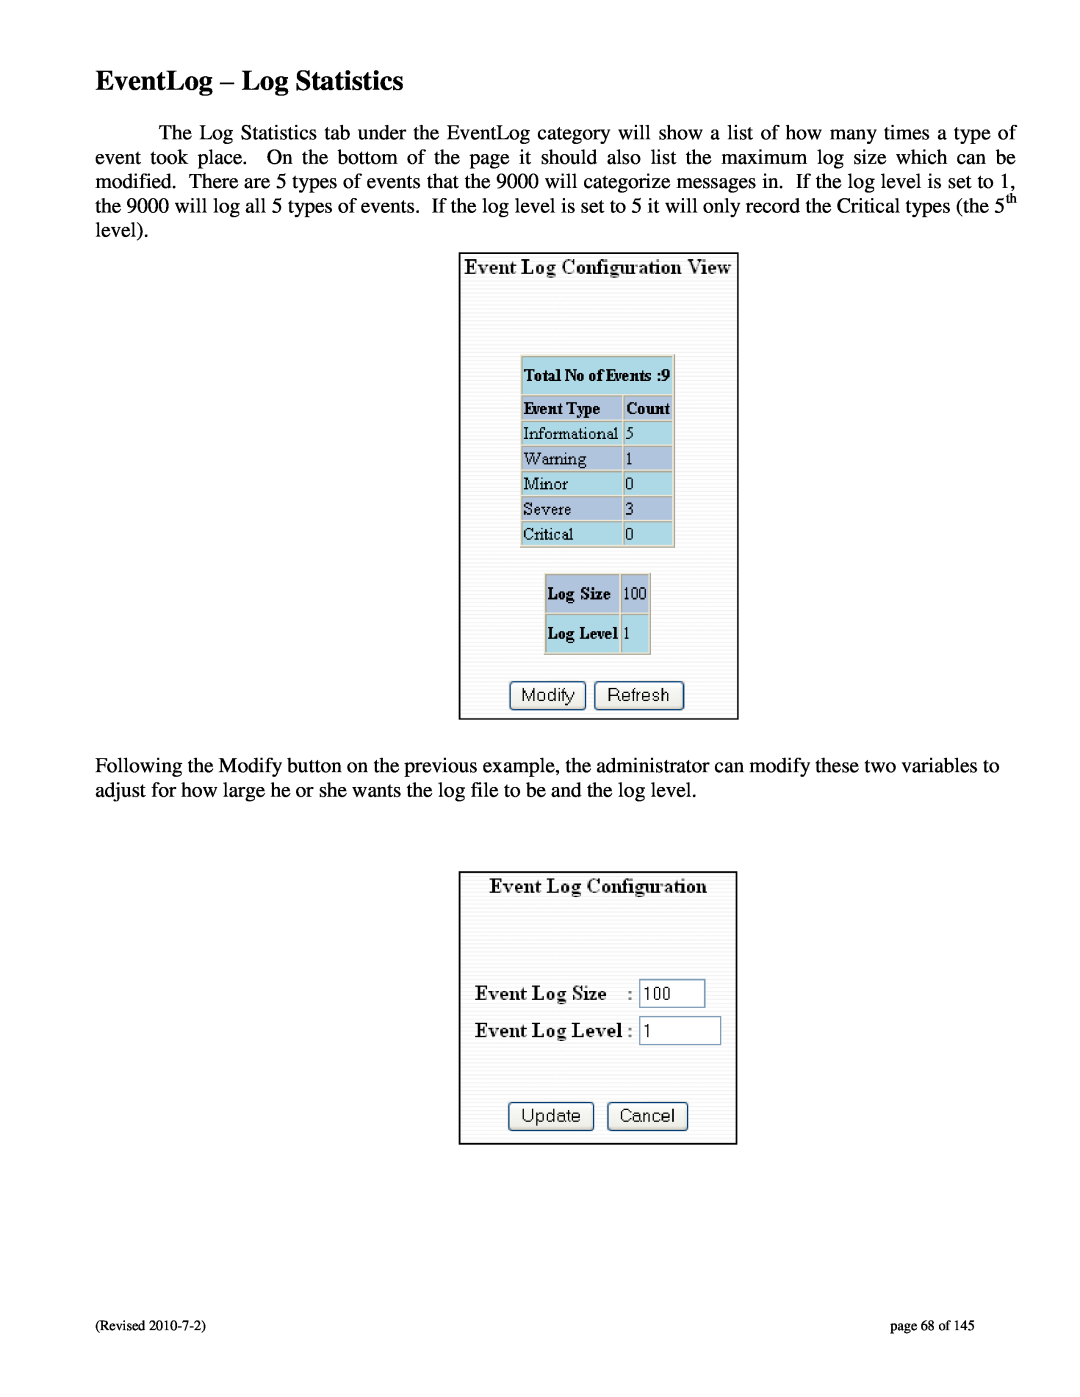 N-Tron 9000 user manual EventLog - Log Statistics, page 68 of 